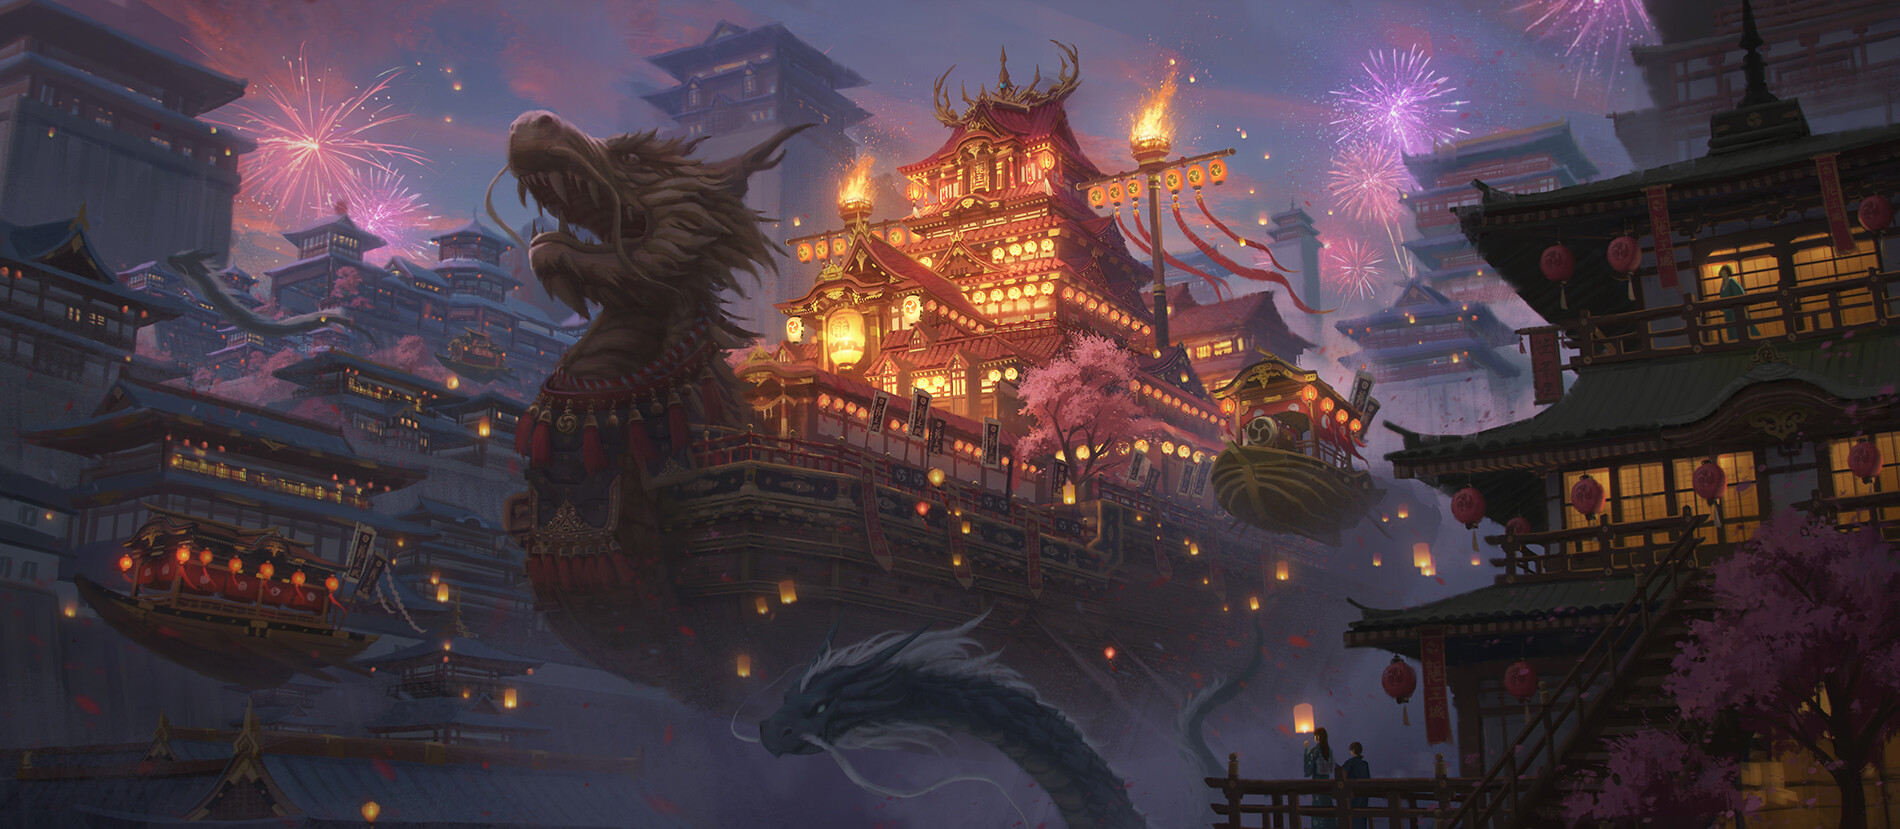 Shusei Sasaya Digital Art Fantasy Art Ship Fireworks Sky Clouds Lights Chinese Dragon Architecture C 1900x829